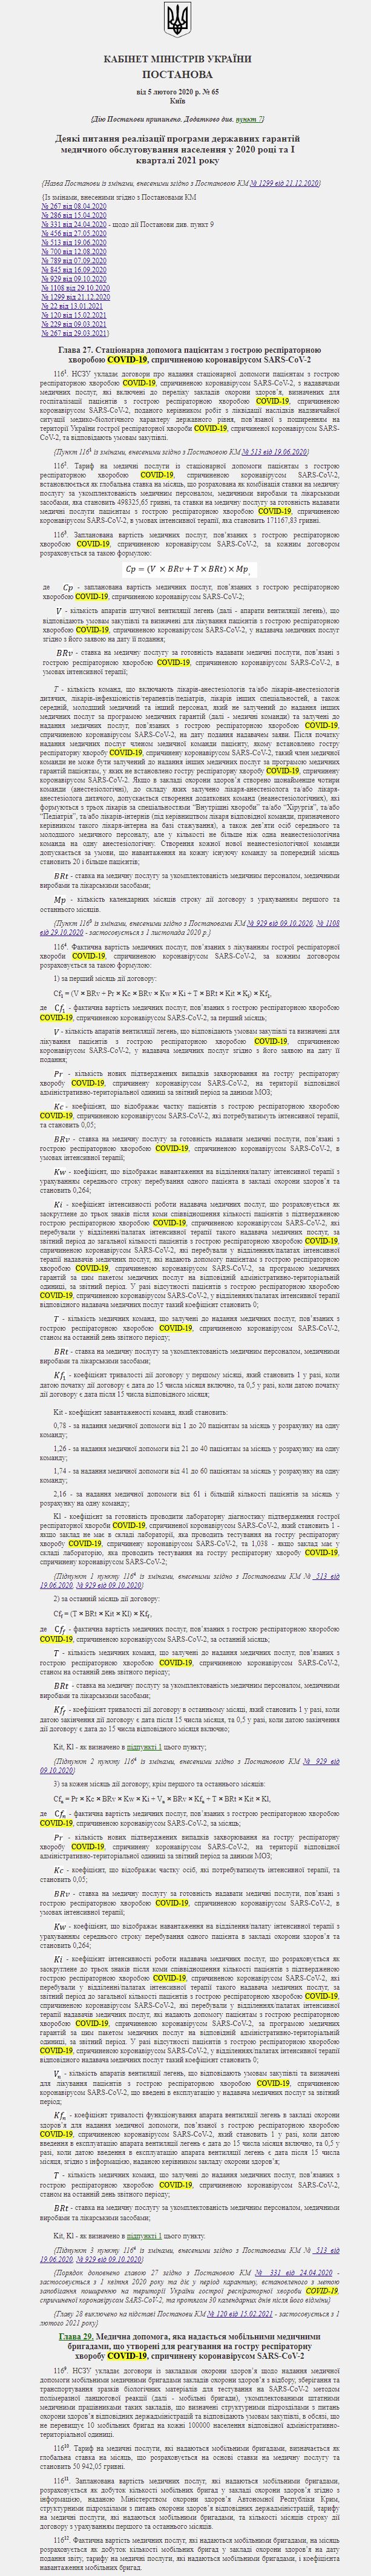 https://zakon.rada.gov.ua/laws/show/65-2020-%D0%BF#Text